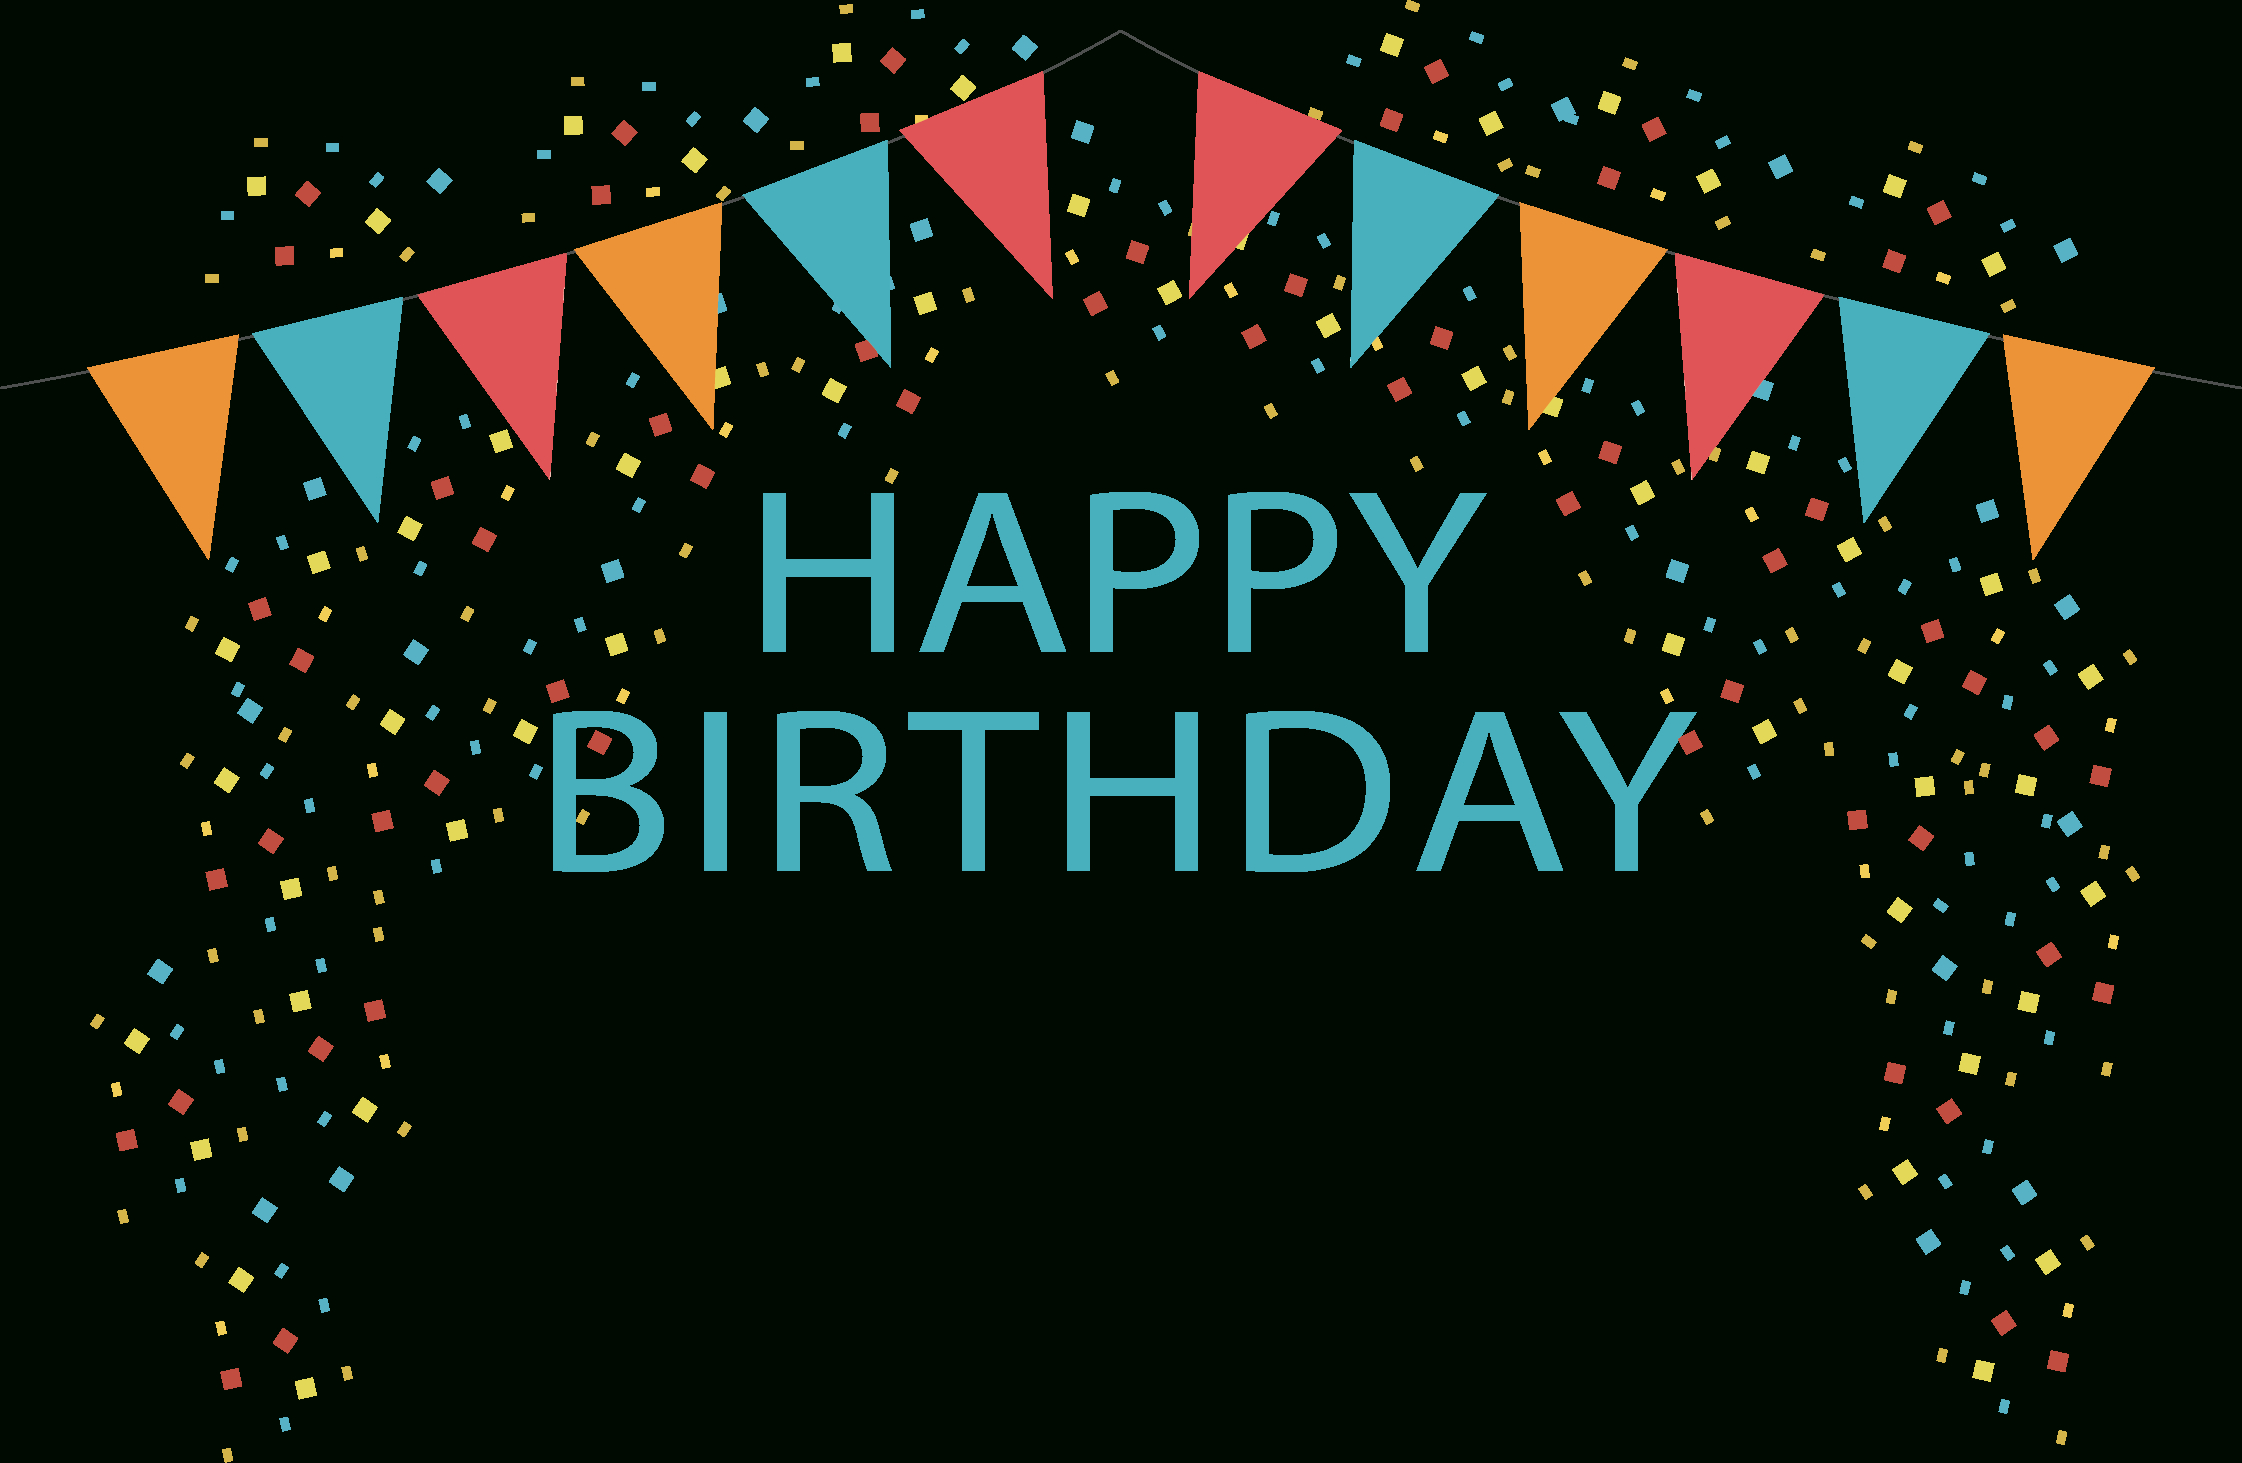 Happy Birthday Banner Designs Free Download – Yeppe Within Free Happy Birthday Banner Templates Download